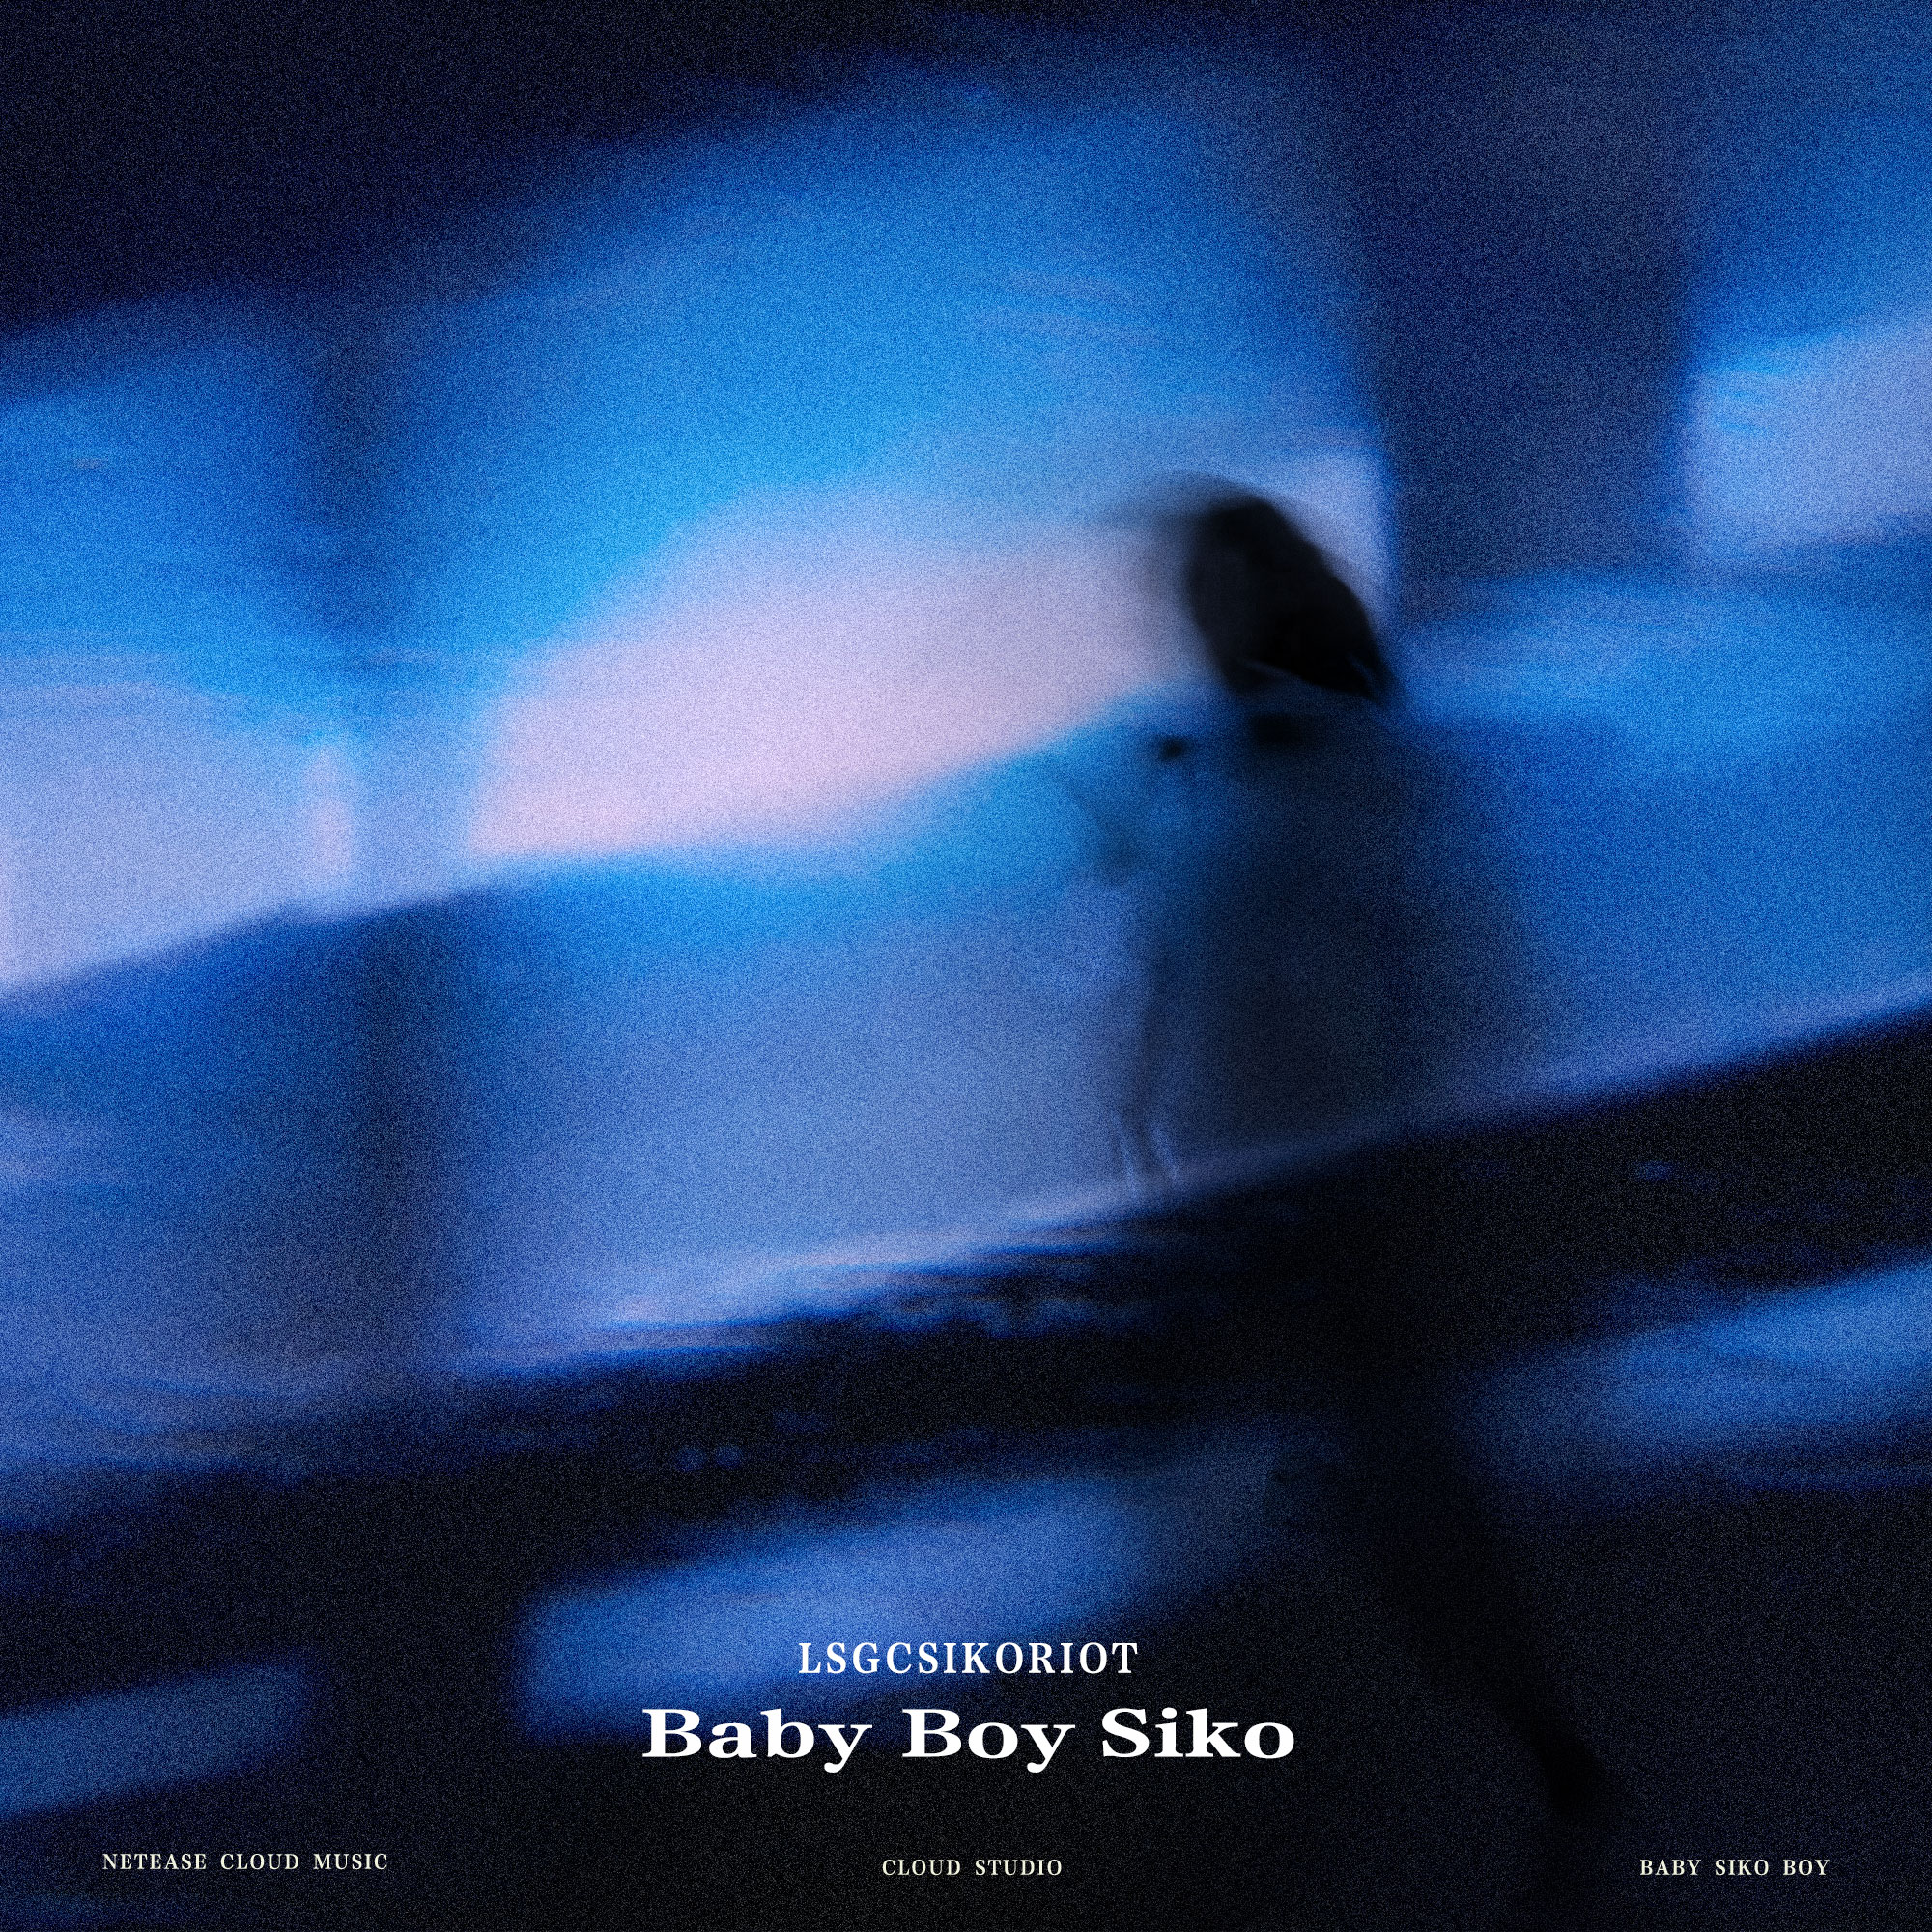 LSGCsikoriot - Baby Boy Siko